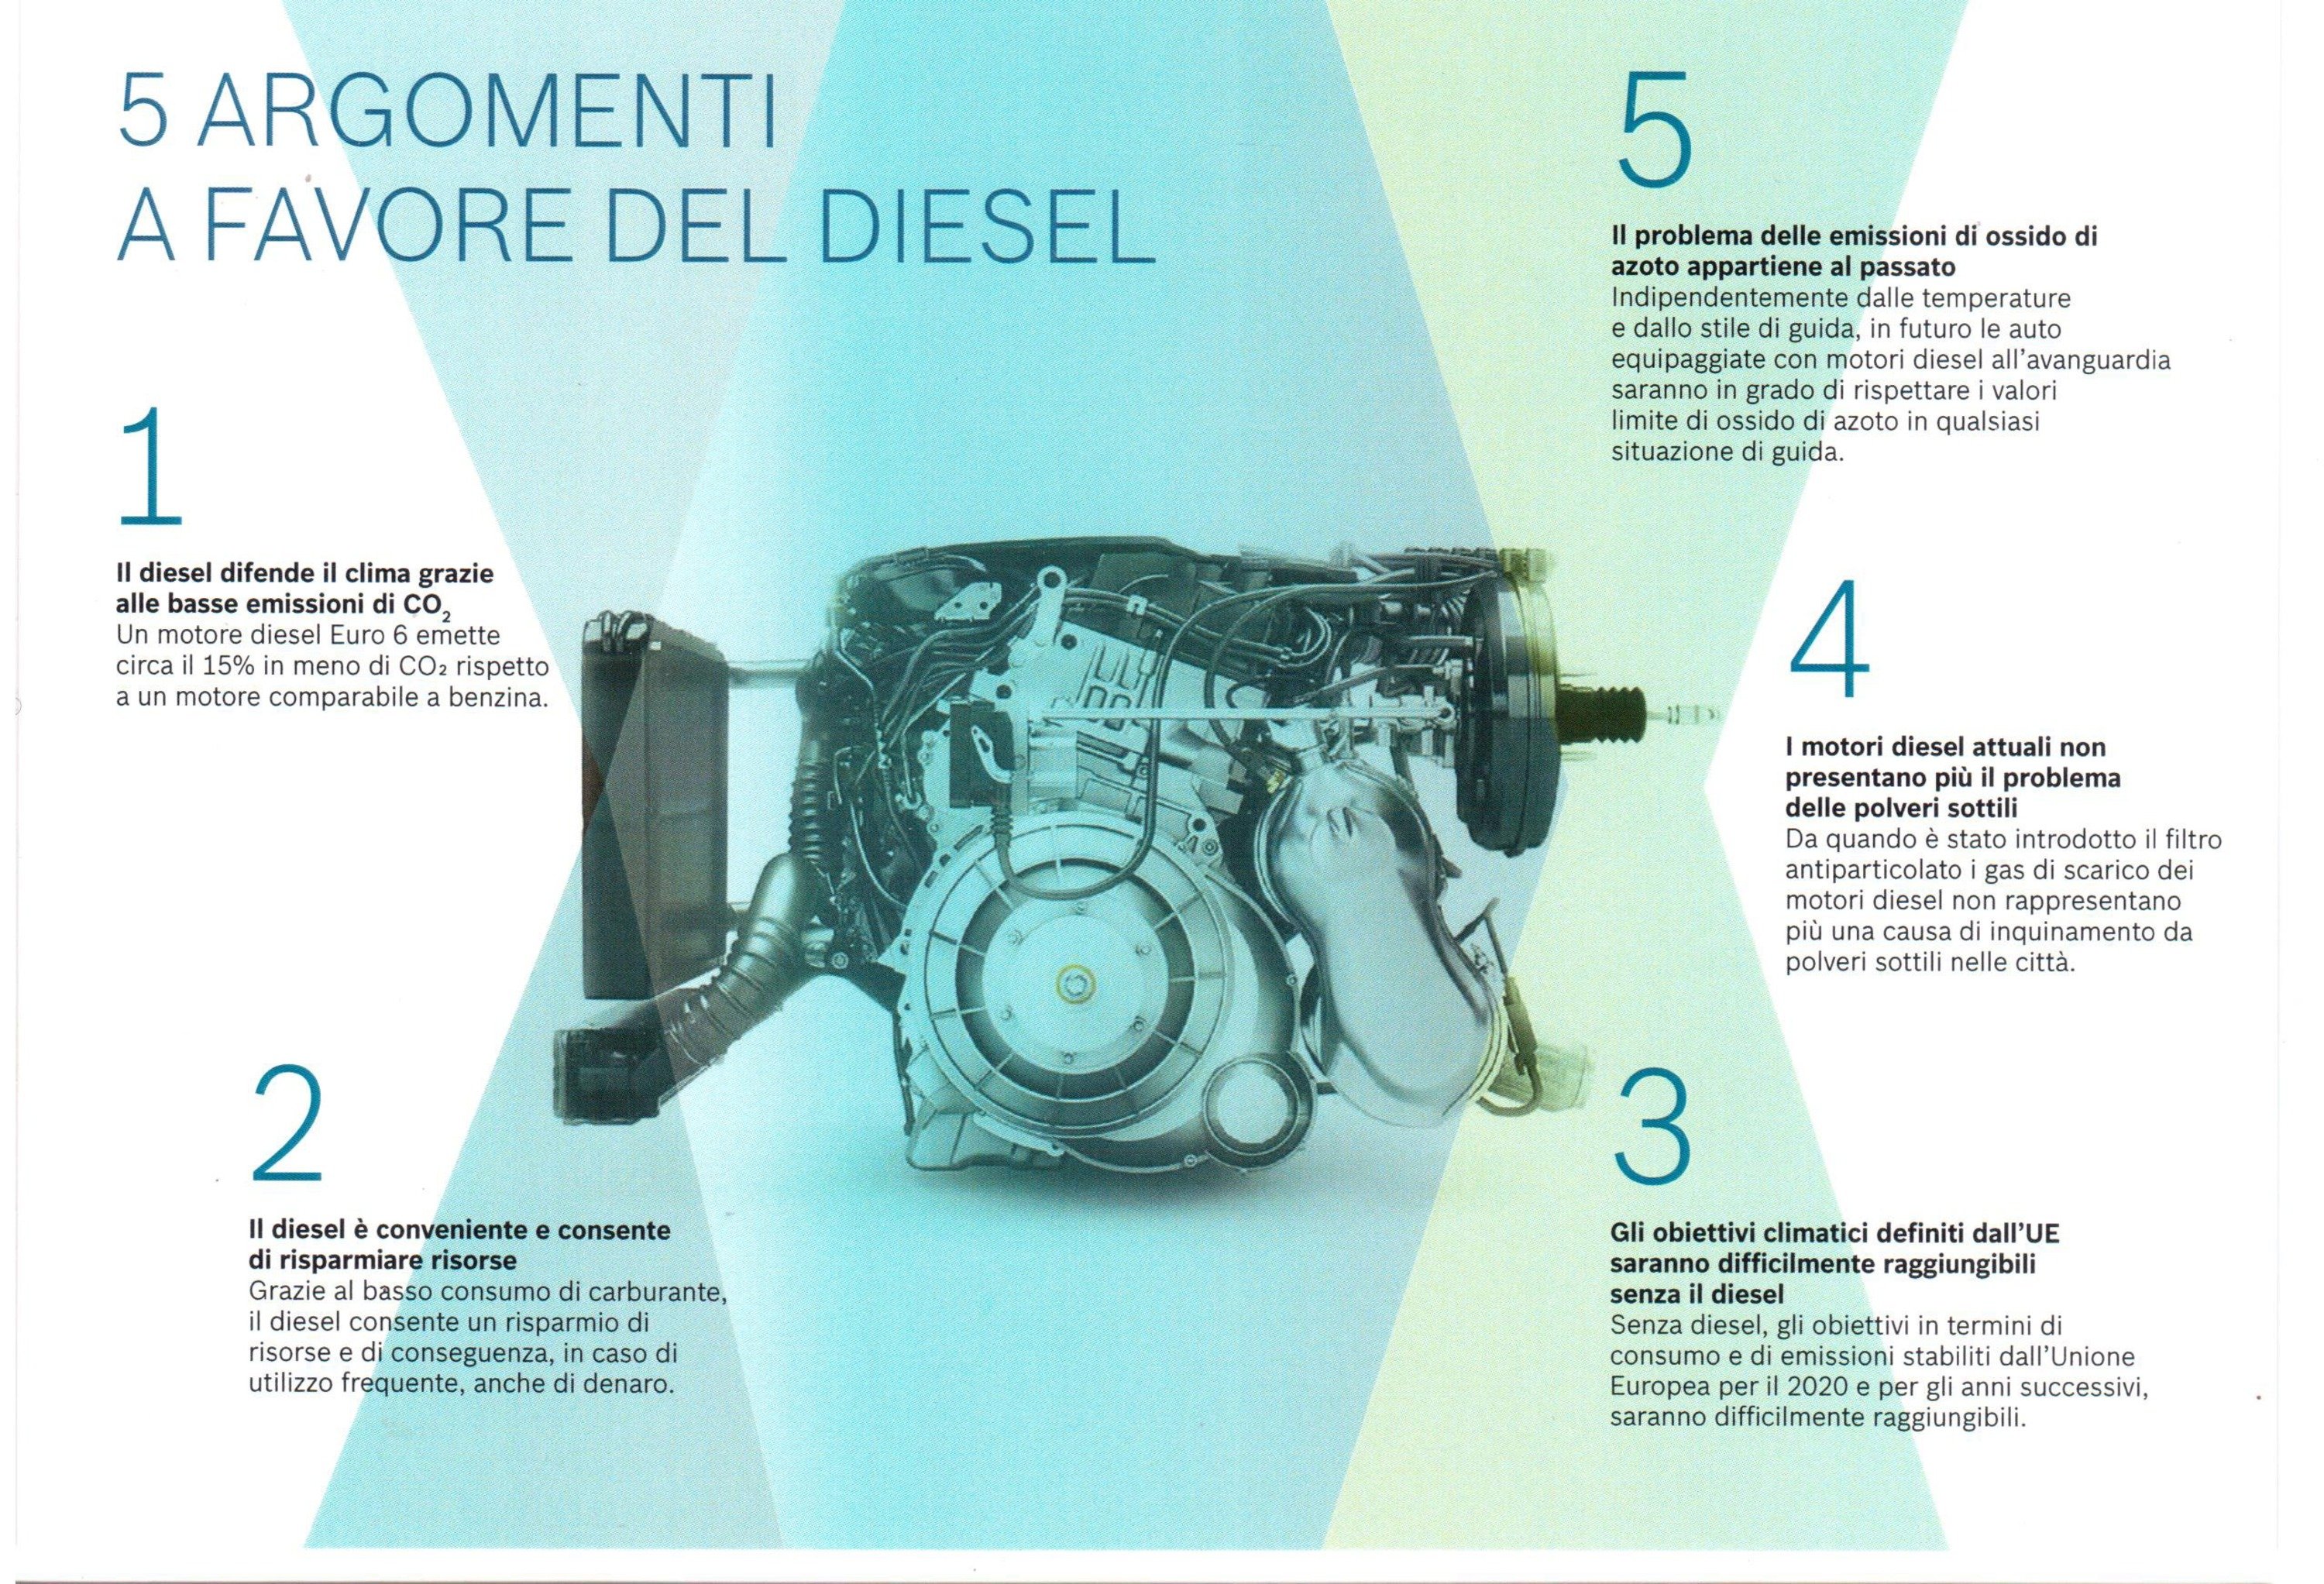 Bosch riabilita il diesel